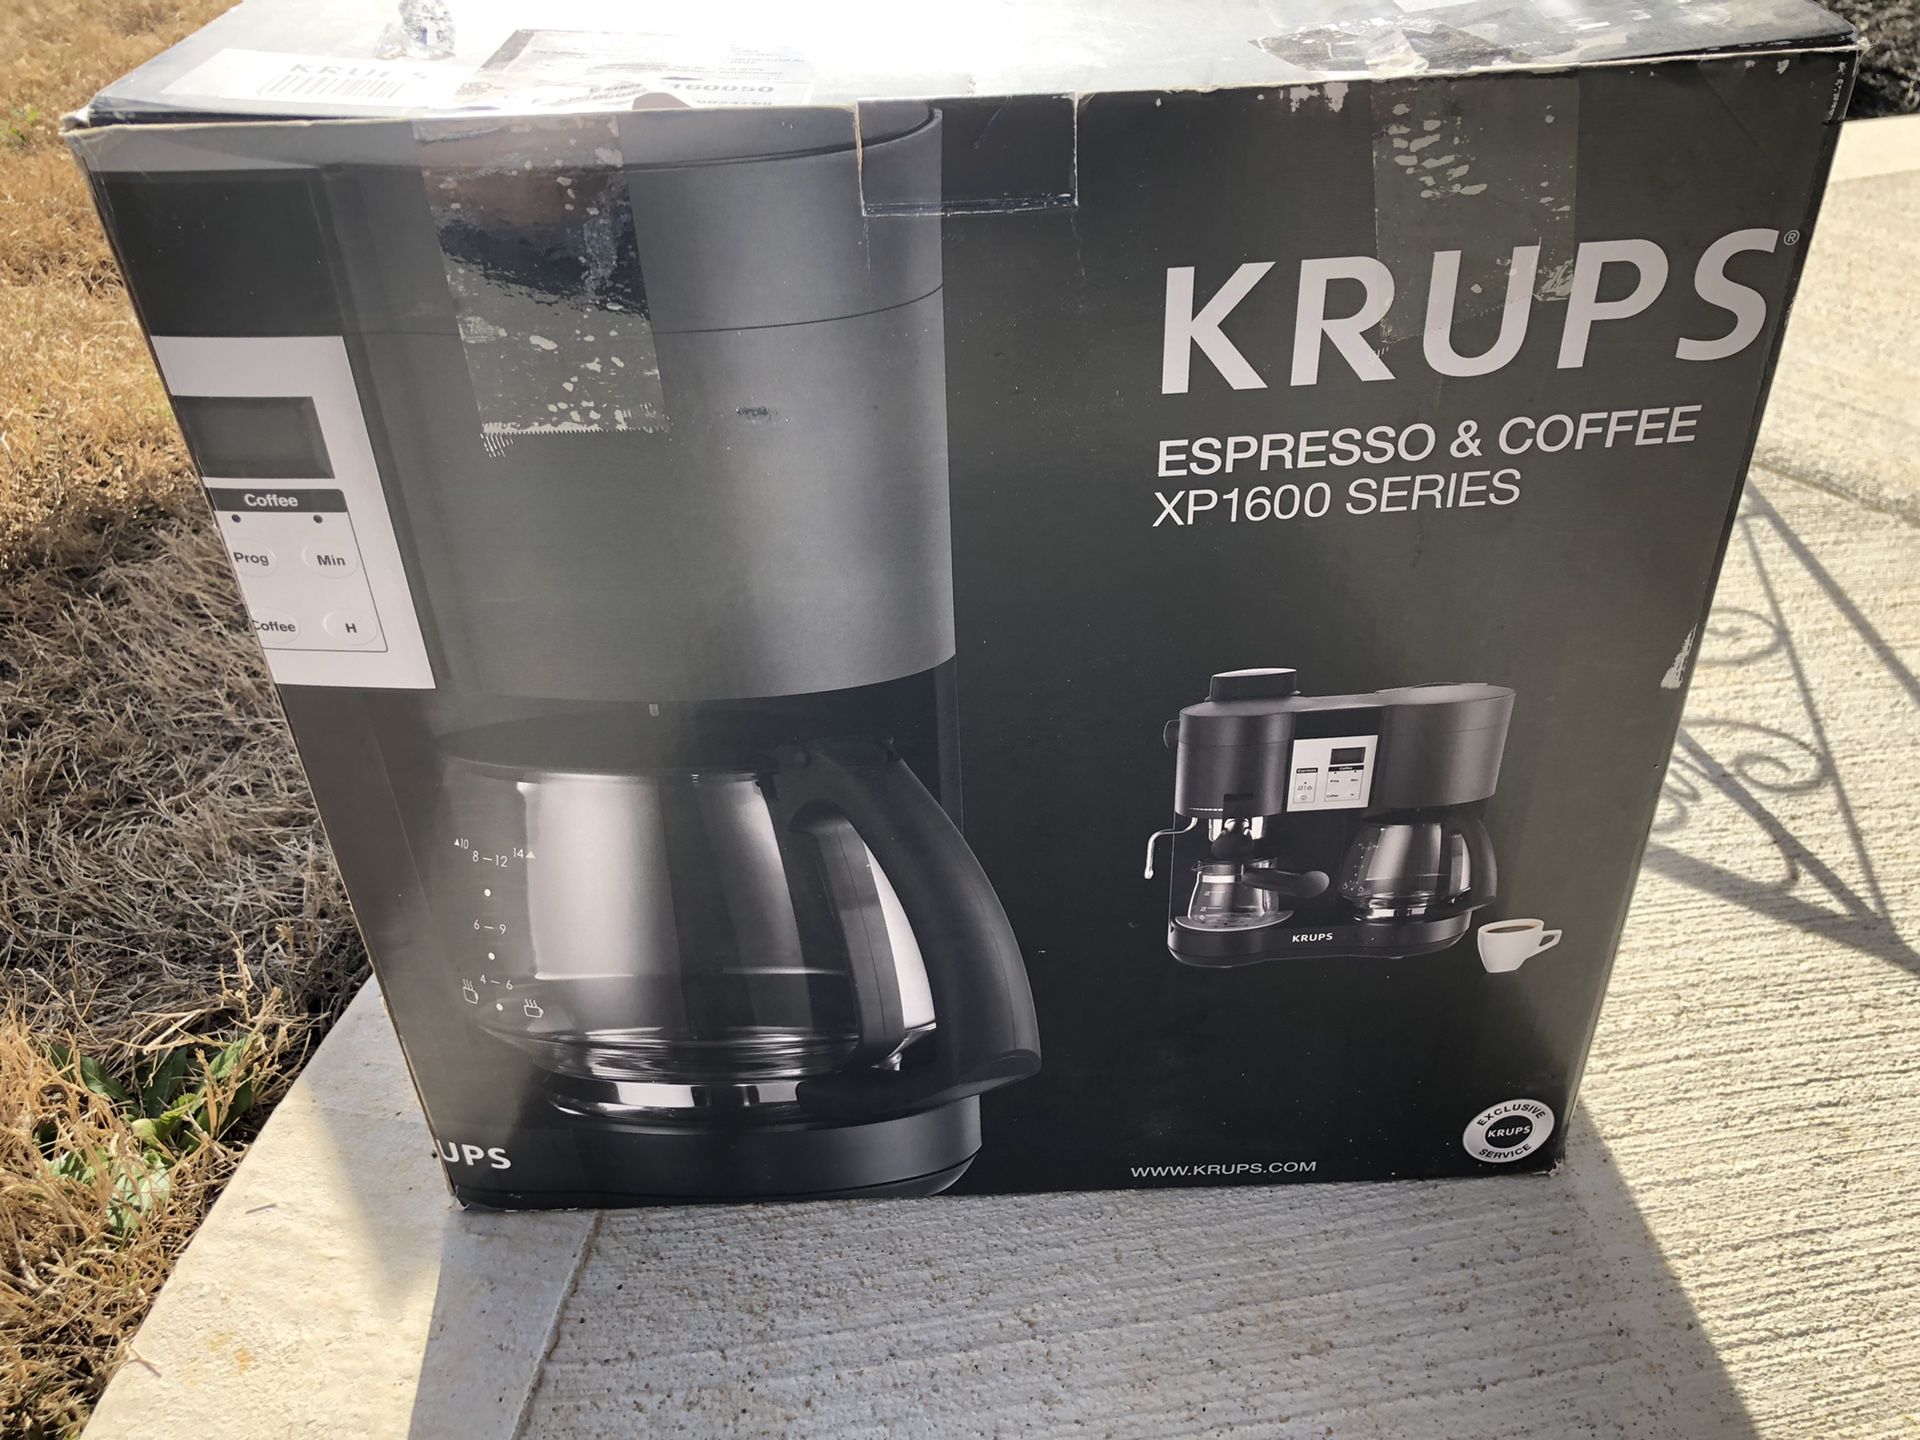 KRUPS espresso and coffee maker